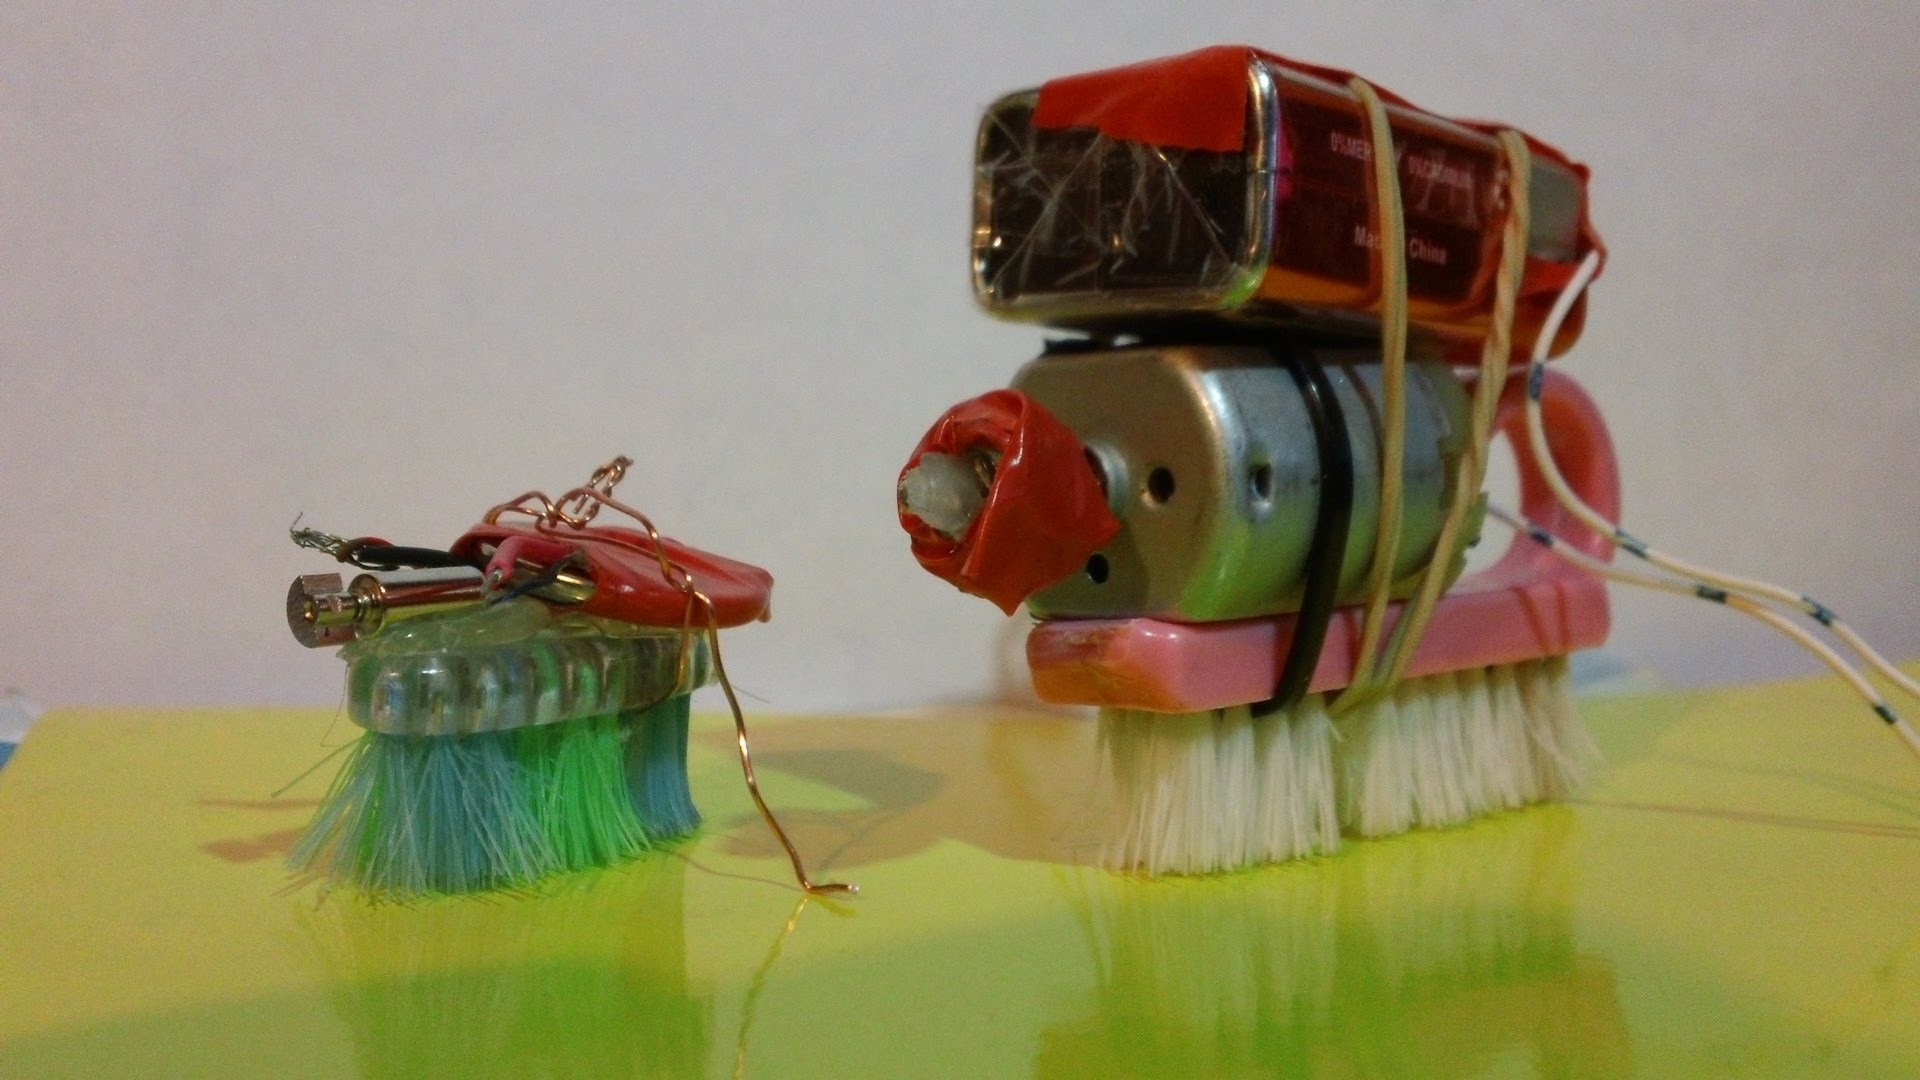 Mini Robot Casero (Como se Hace) electronic bug